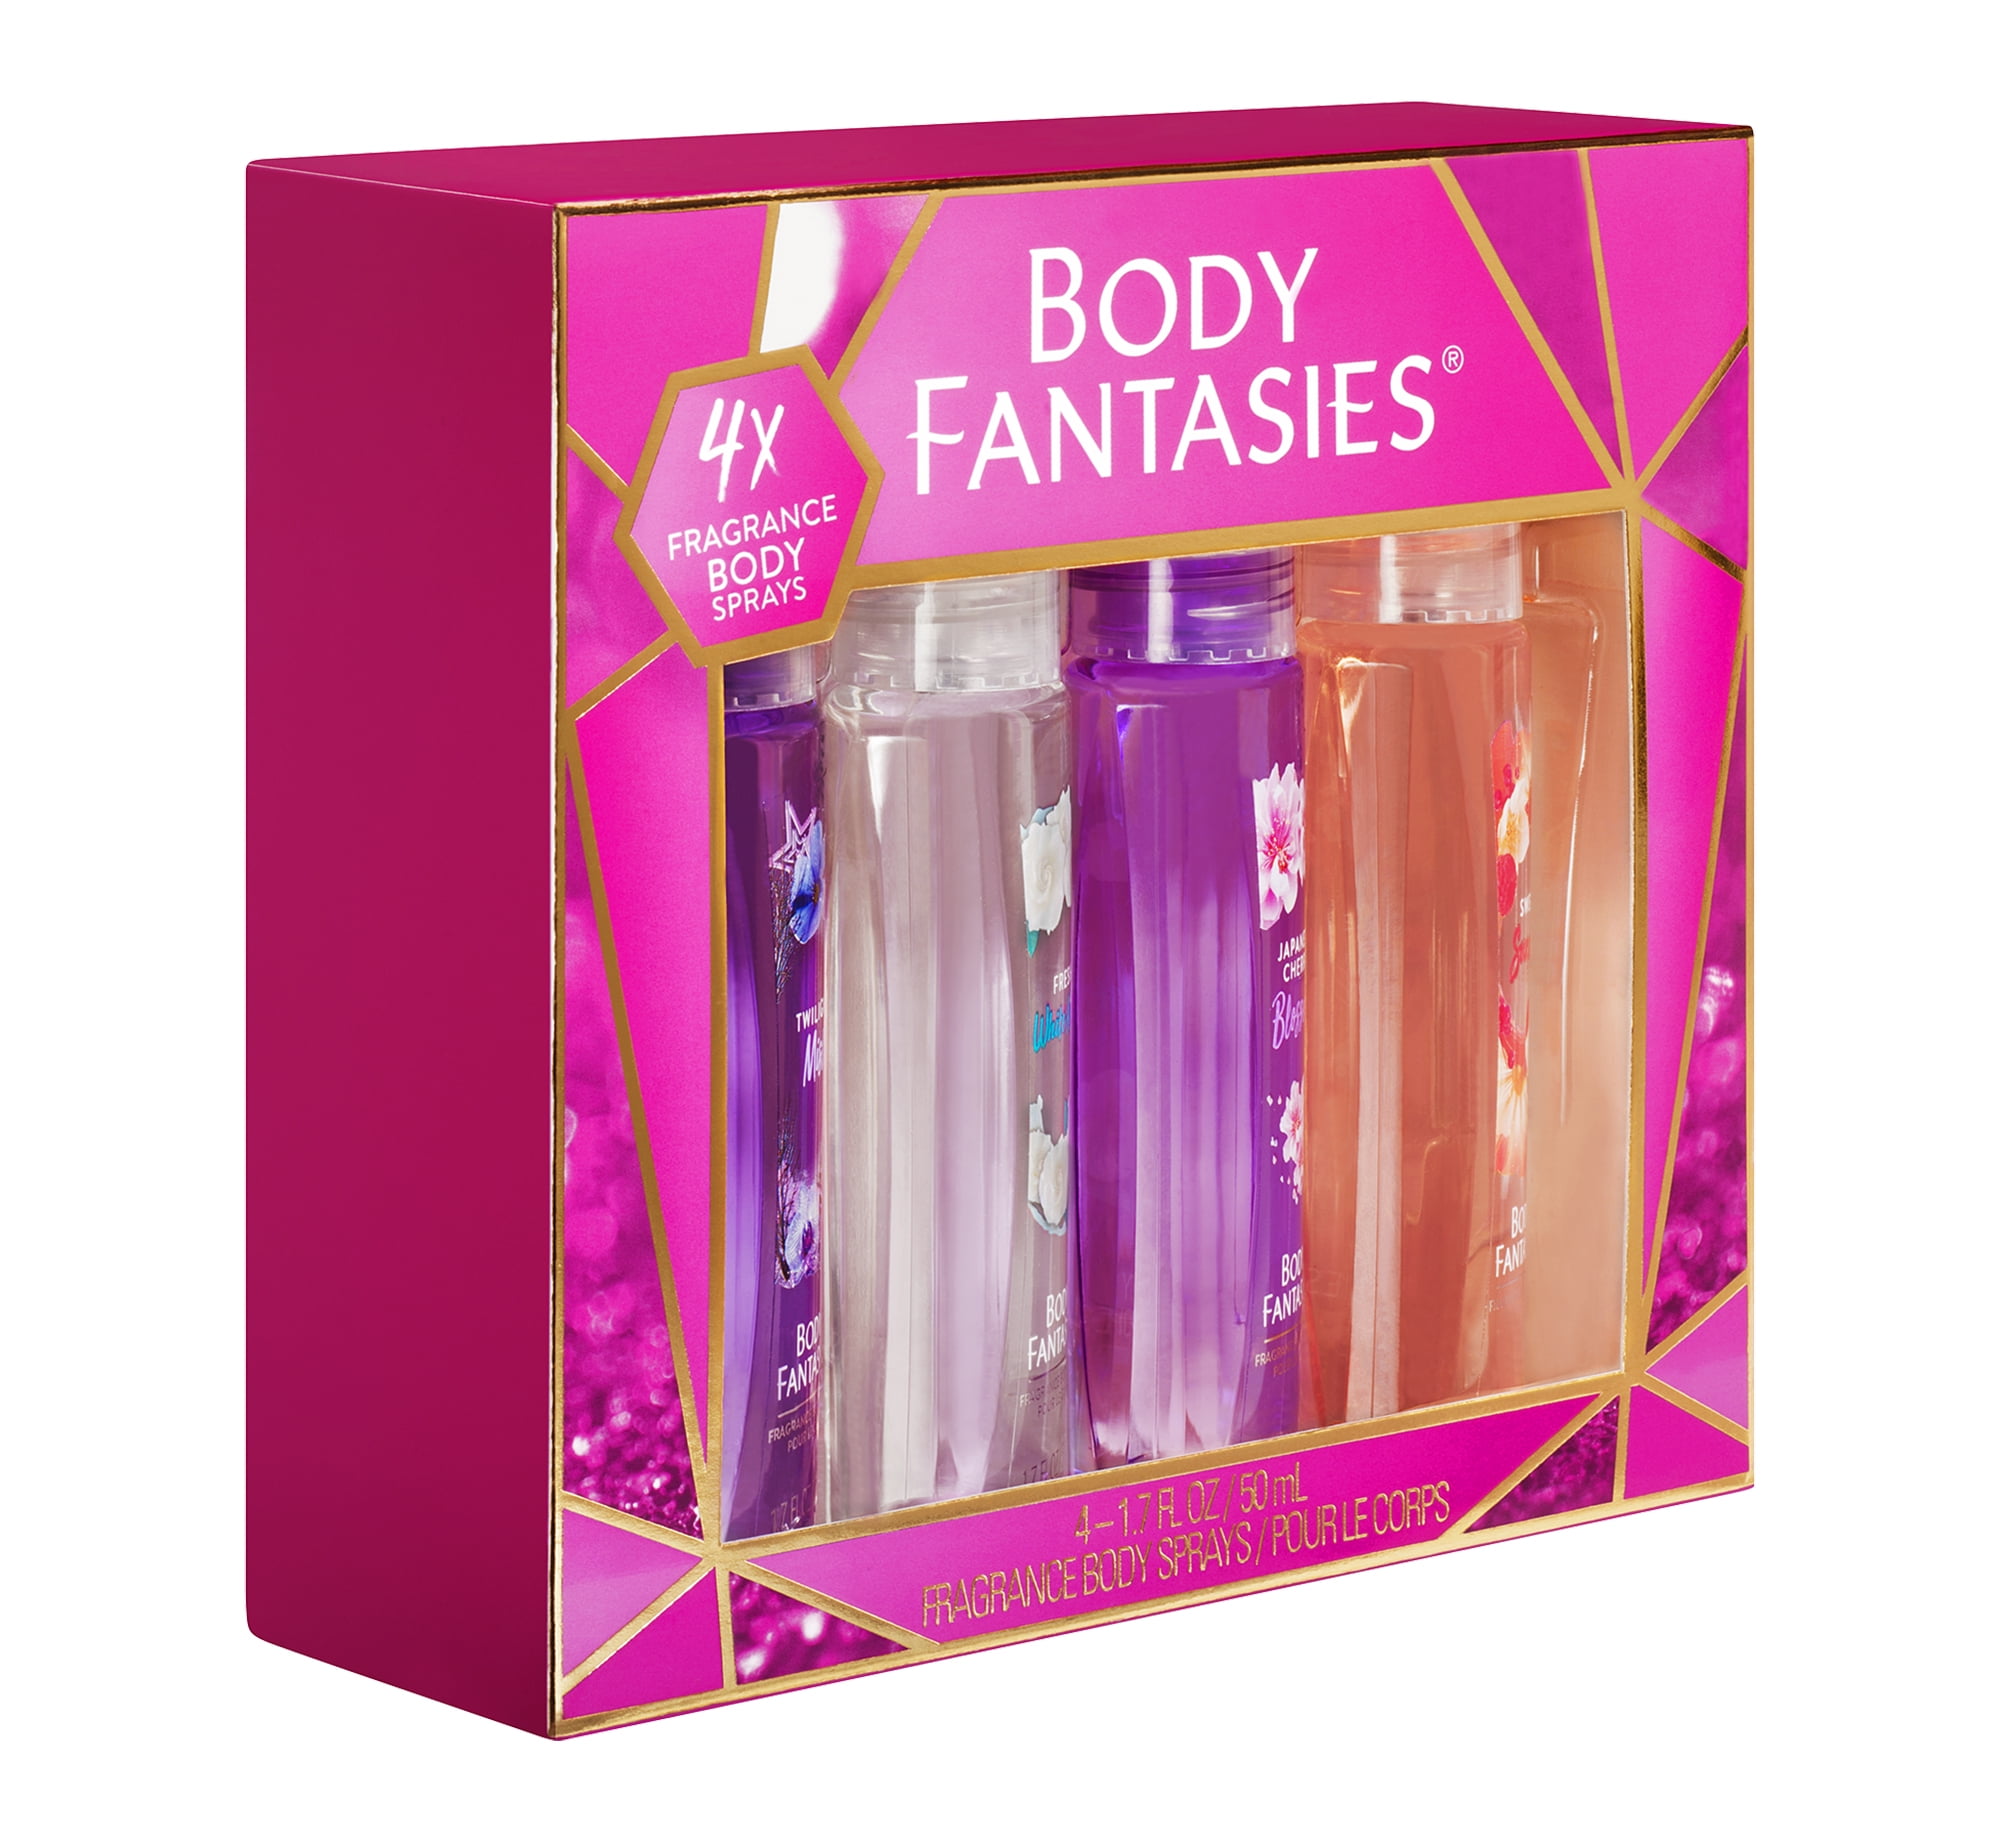 Body Fantasies Signature Fragrance Body Spray Gift Set, 1.7 fl oz, 4 Count  - Walmart.com